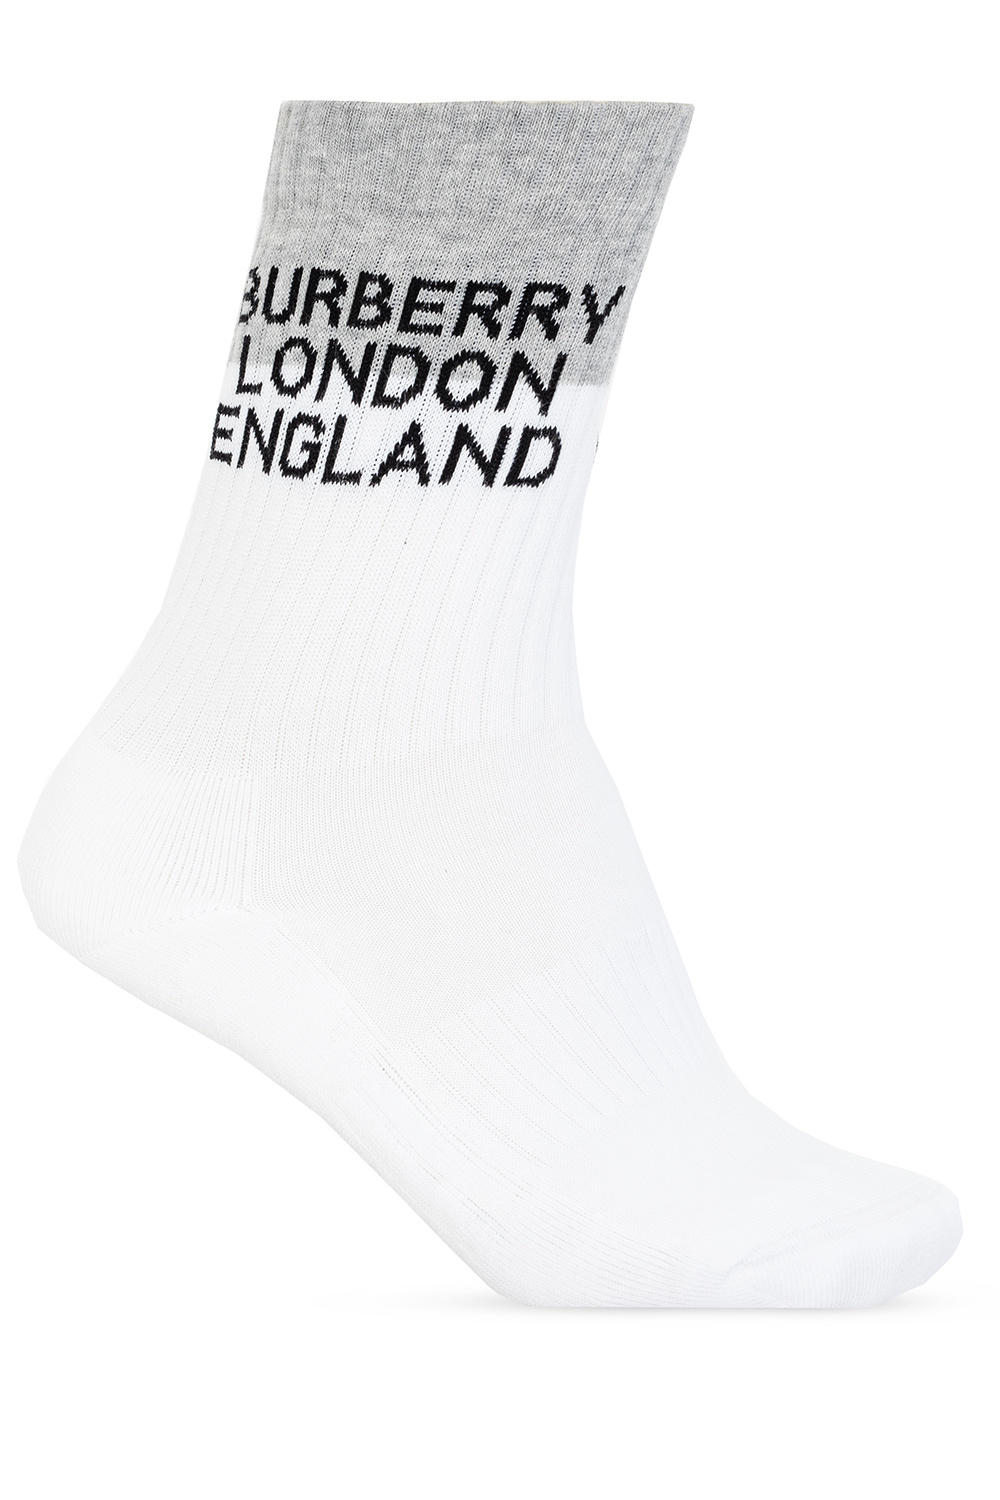 White Socks with logo Burberry - Vitkac France